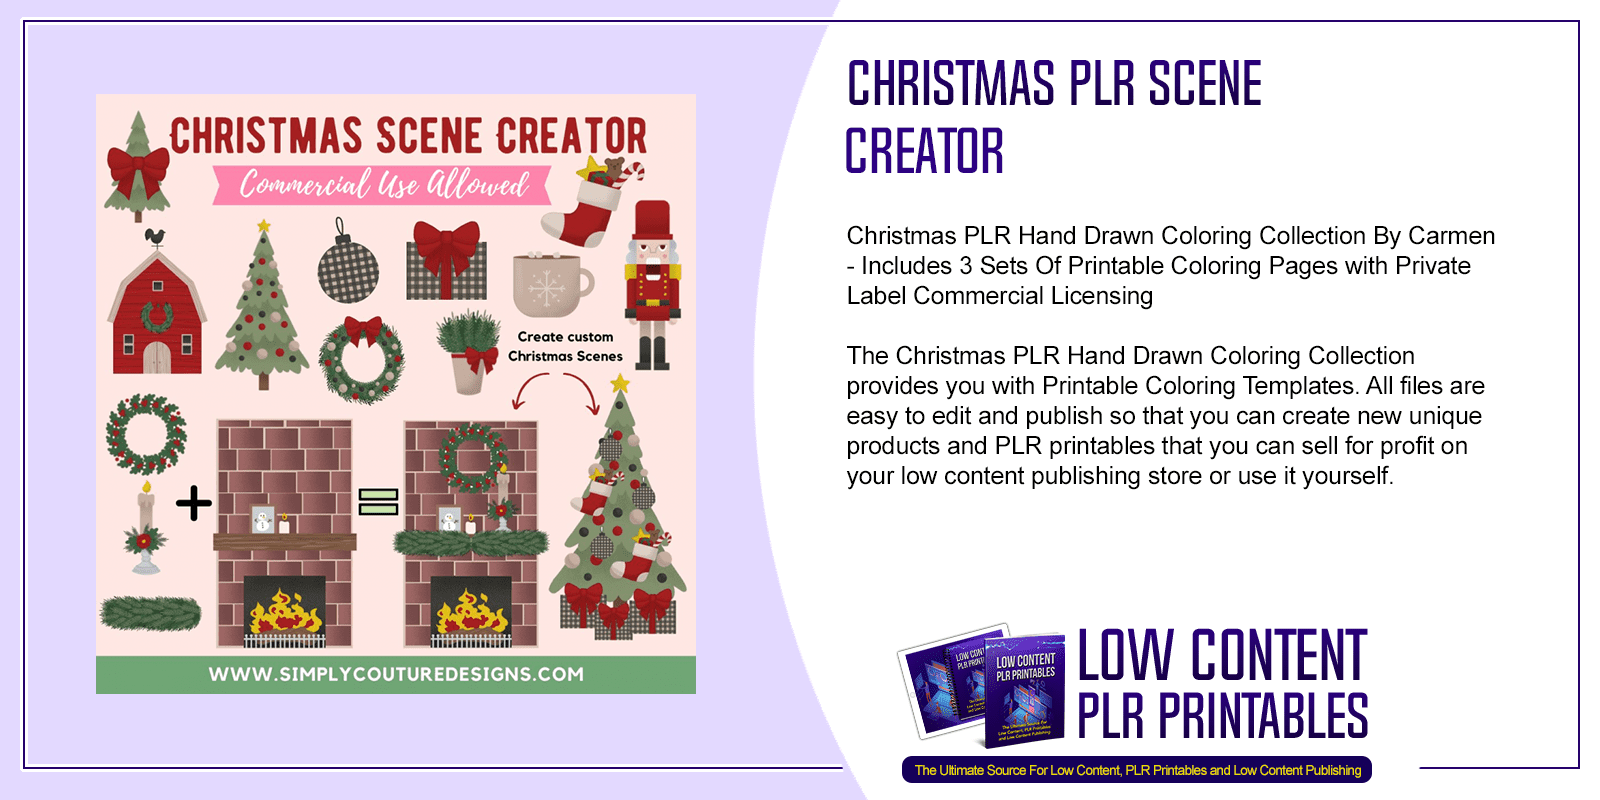 Christmas PLR Scene Creator